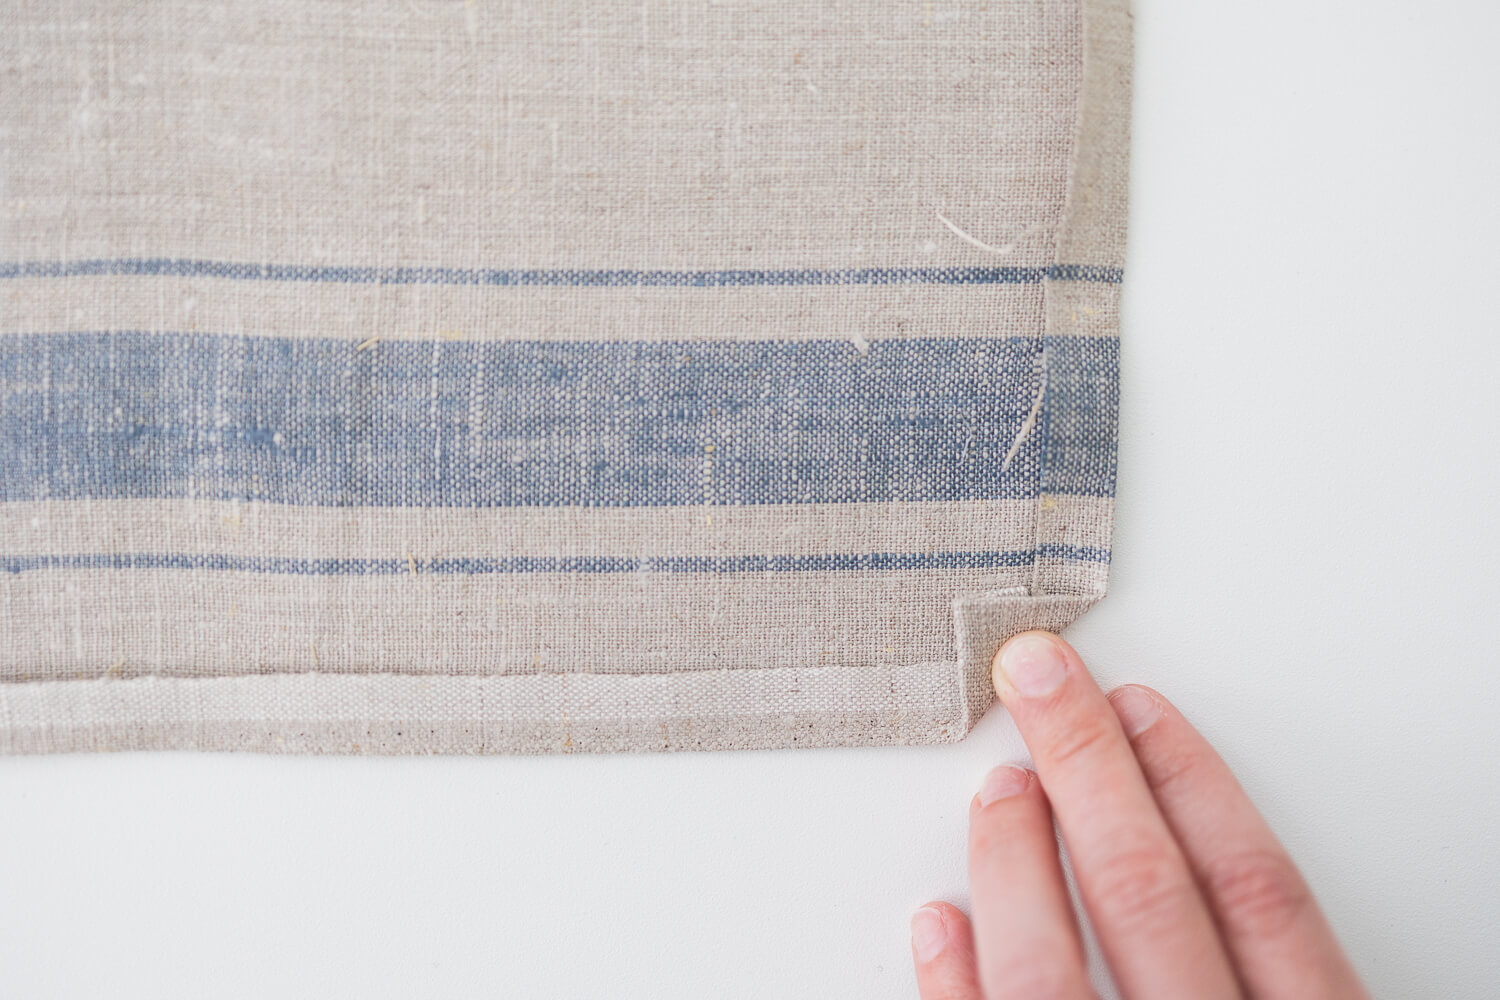 How To Make A Buffalo Check Ruffled Tea Towel – Mother Thyme